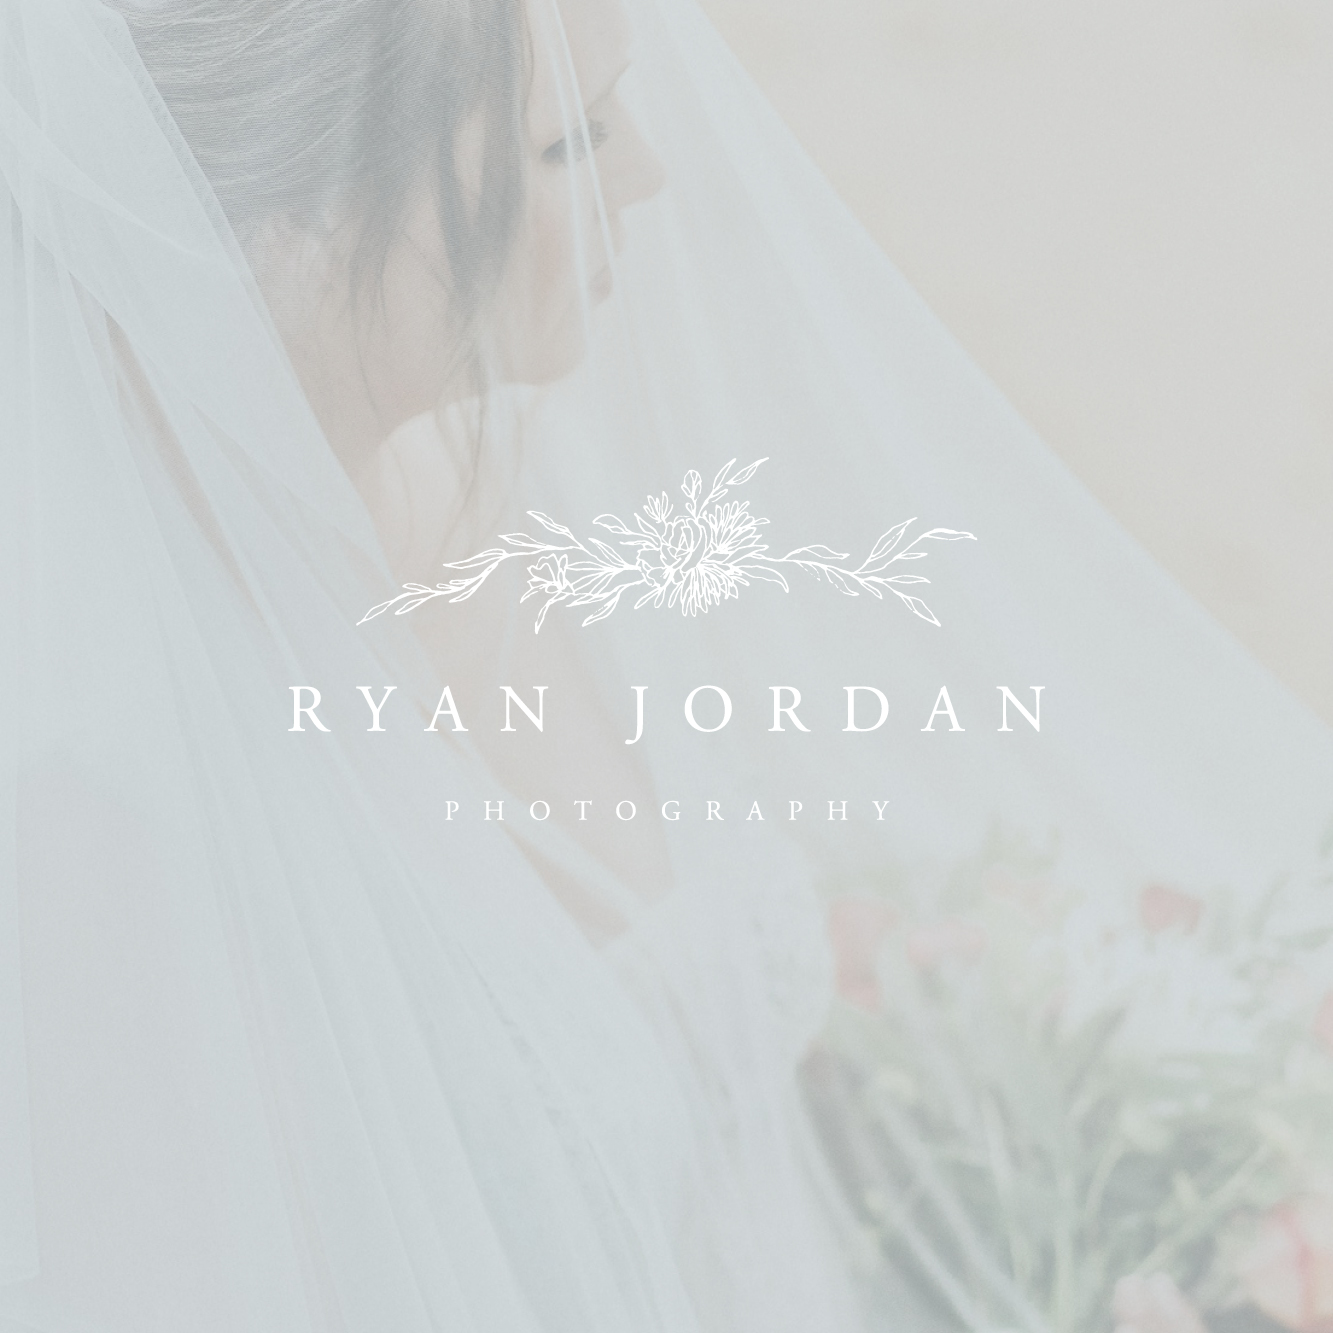 Wedding Photographer Branding // Ryan Jordan by Sarah Ann Design